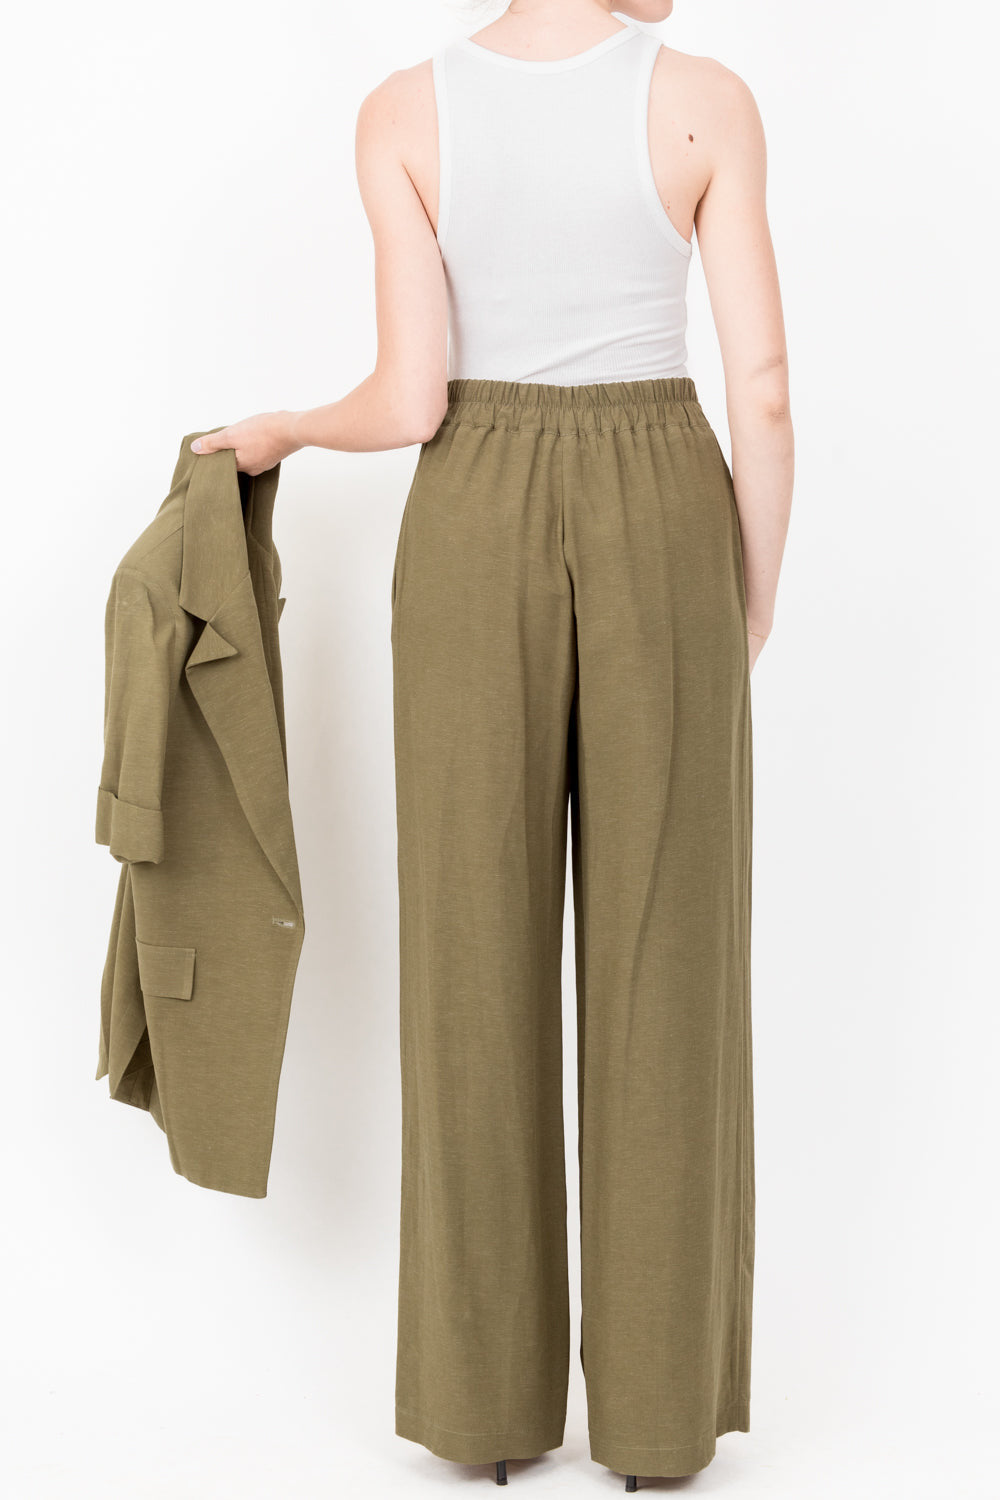 Dixie - Completo giacca e pantalone misto lino Art. J845J070/P845J228